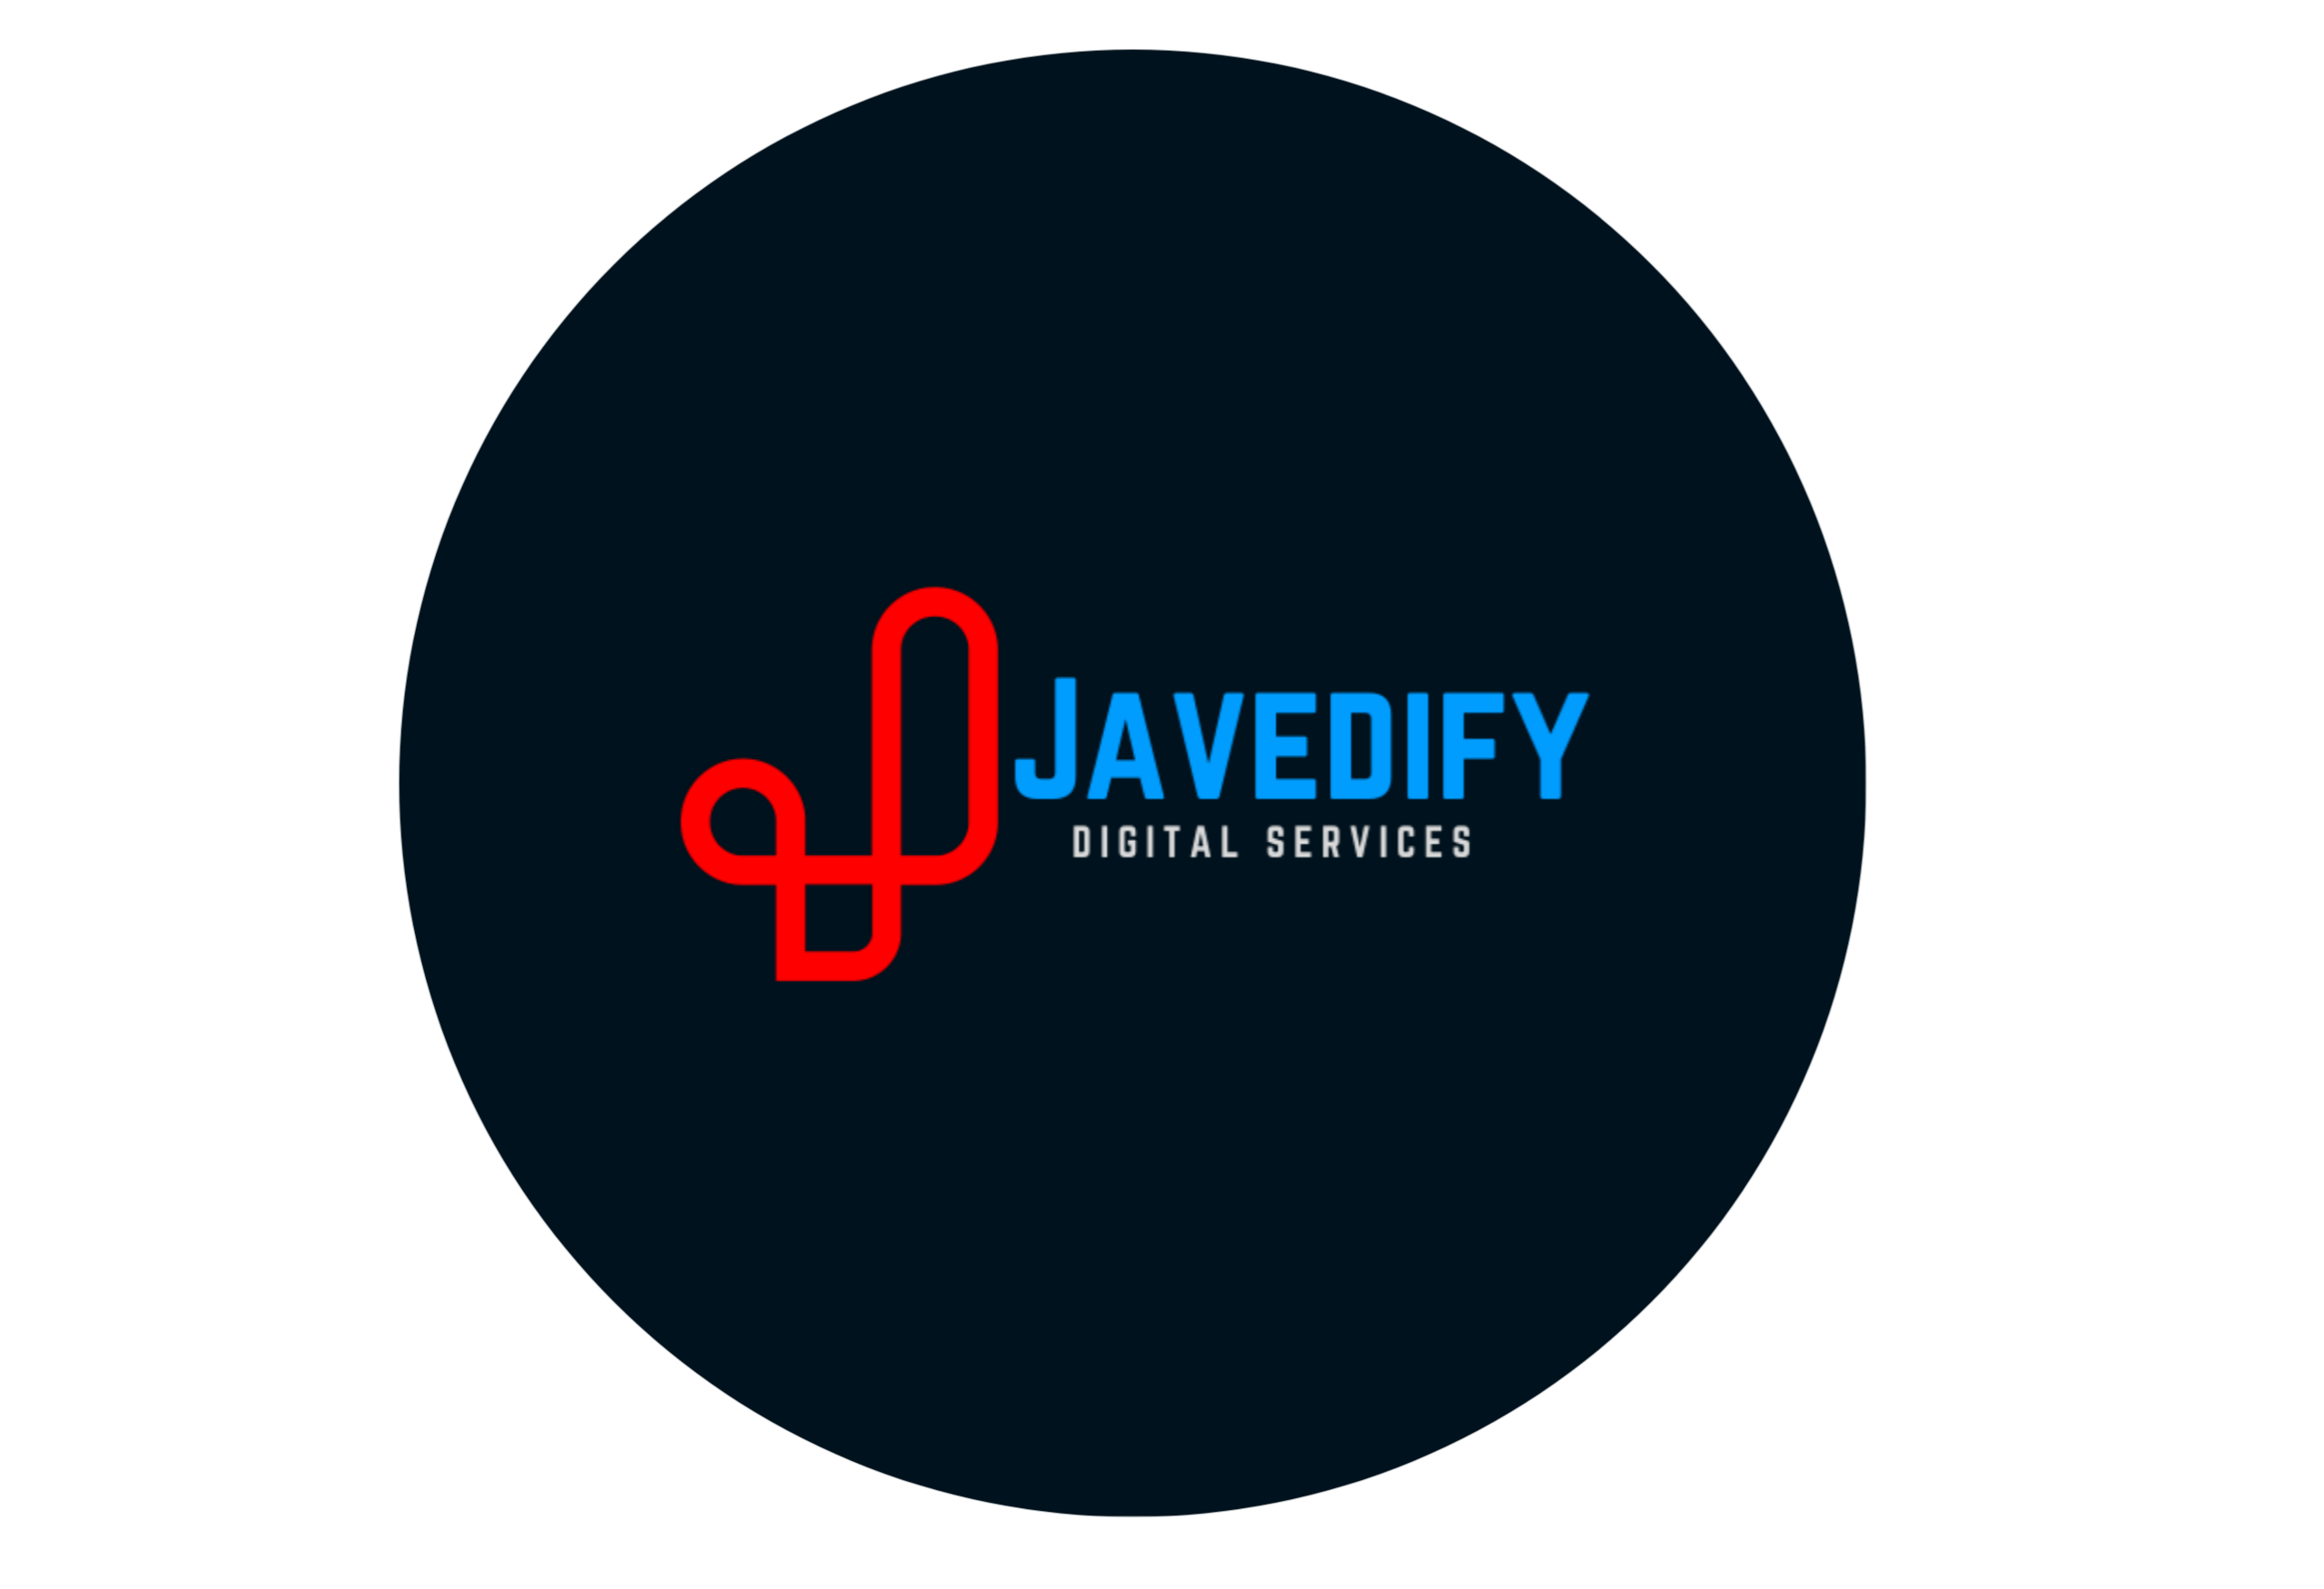 Javedify